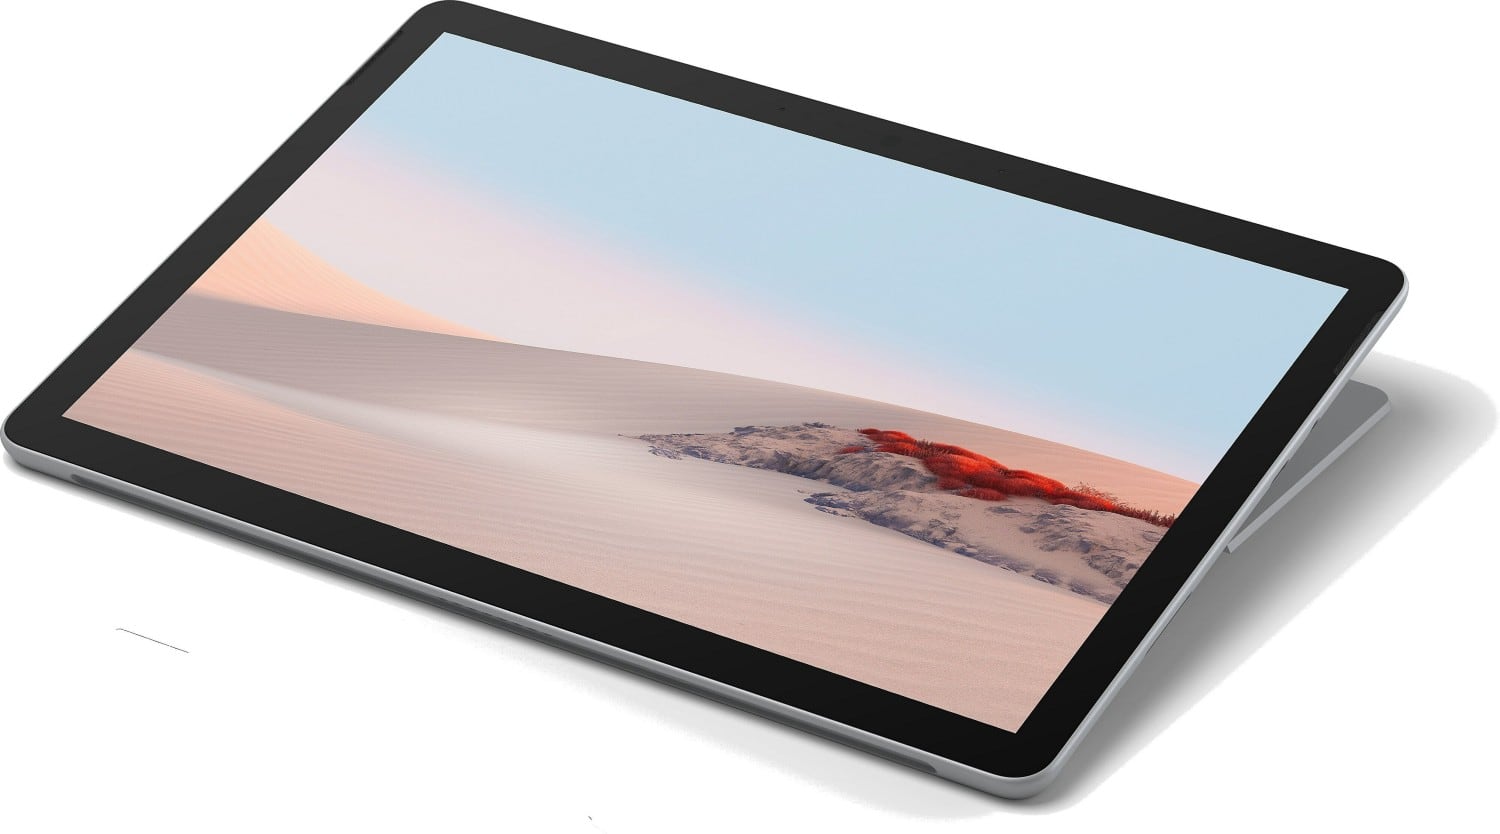 Microsoft Surface Go 2 | Pentium Gold 4425Y |10,5" | 4GB | 64GB SSD | Win 10 Pro | 2 in 1 Convertibel | Tablet und Laptop 